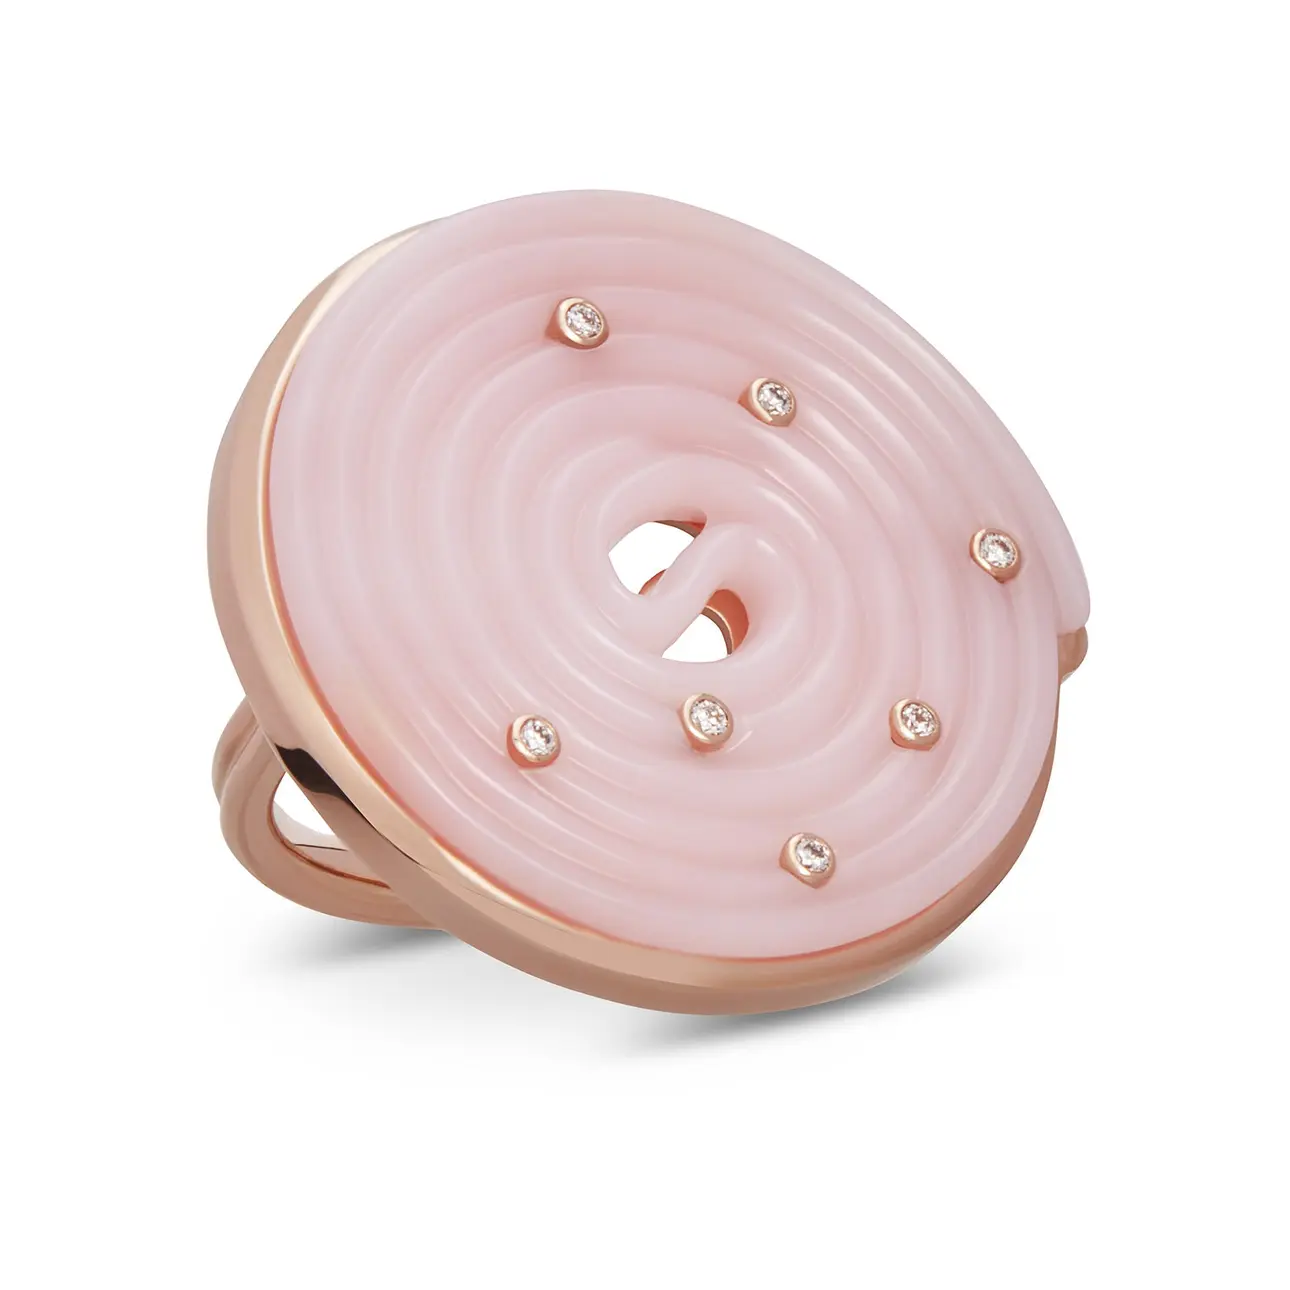 Licorice Ring Stoned – Rose Gold Pink Opal
– Alina Abegg